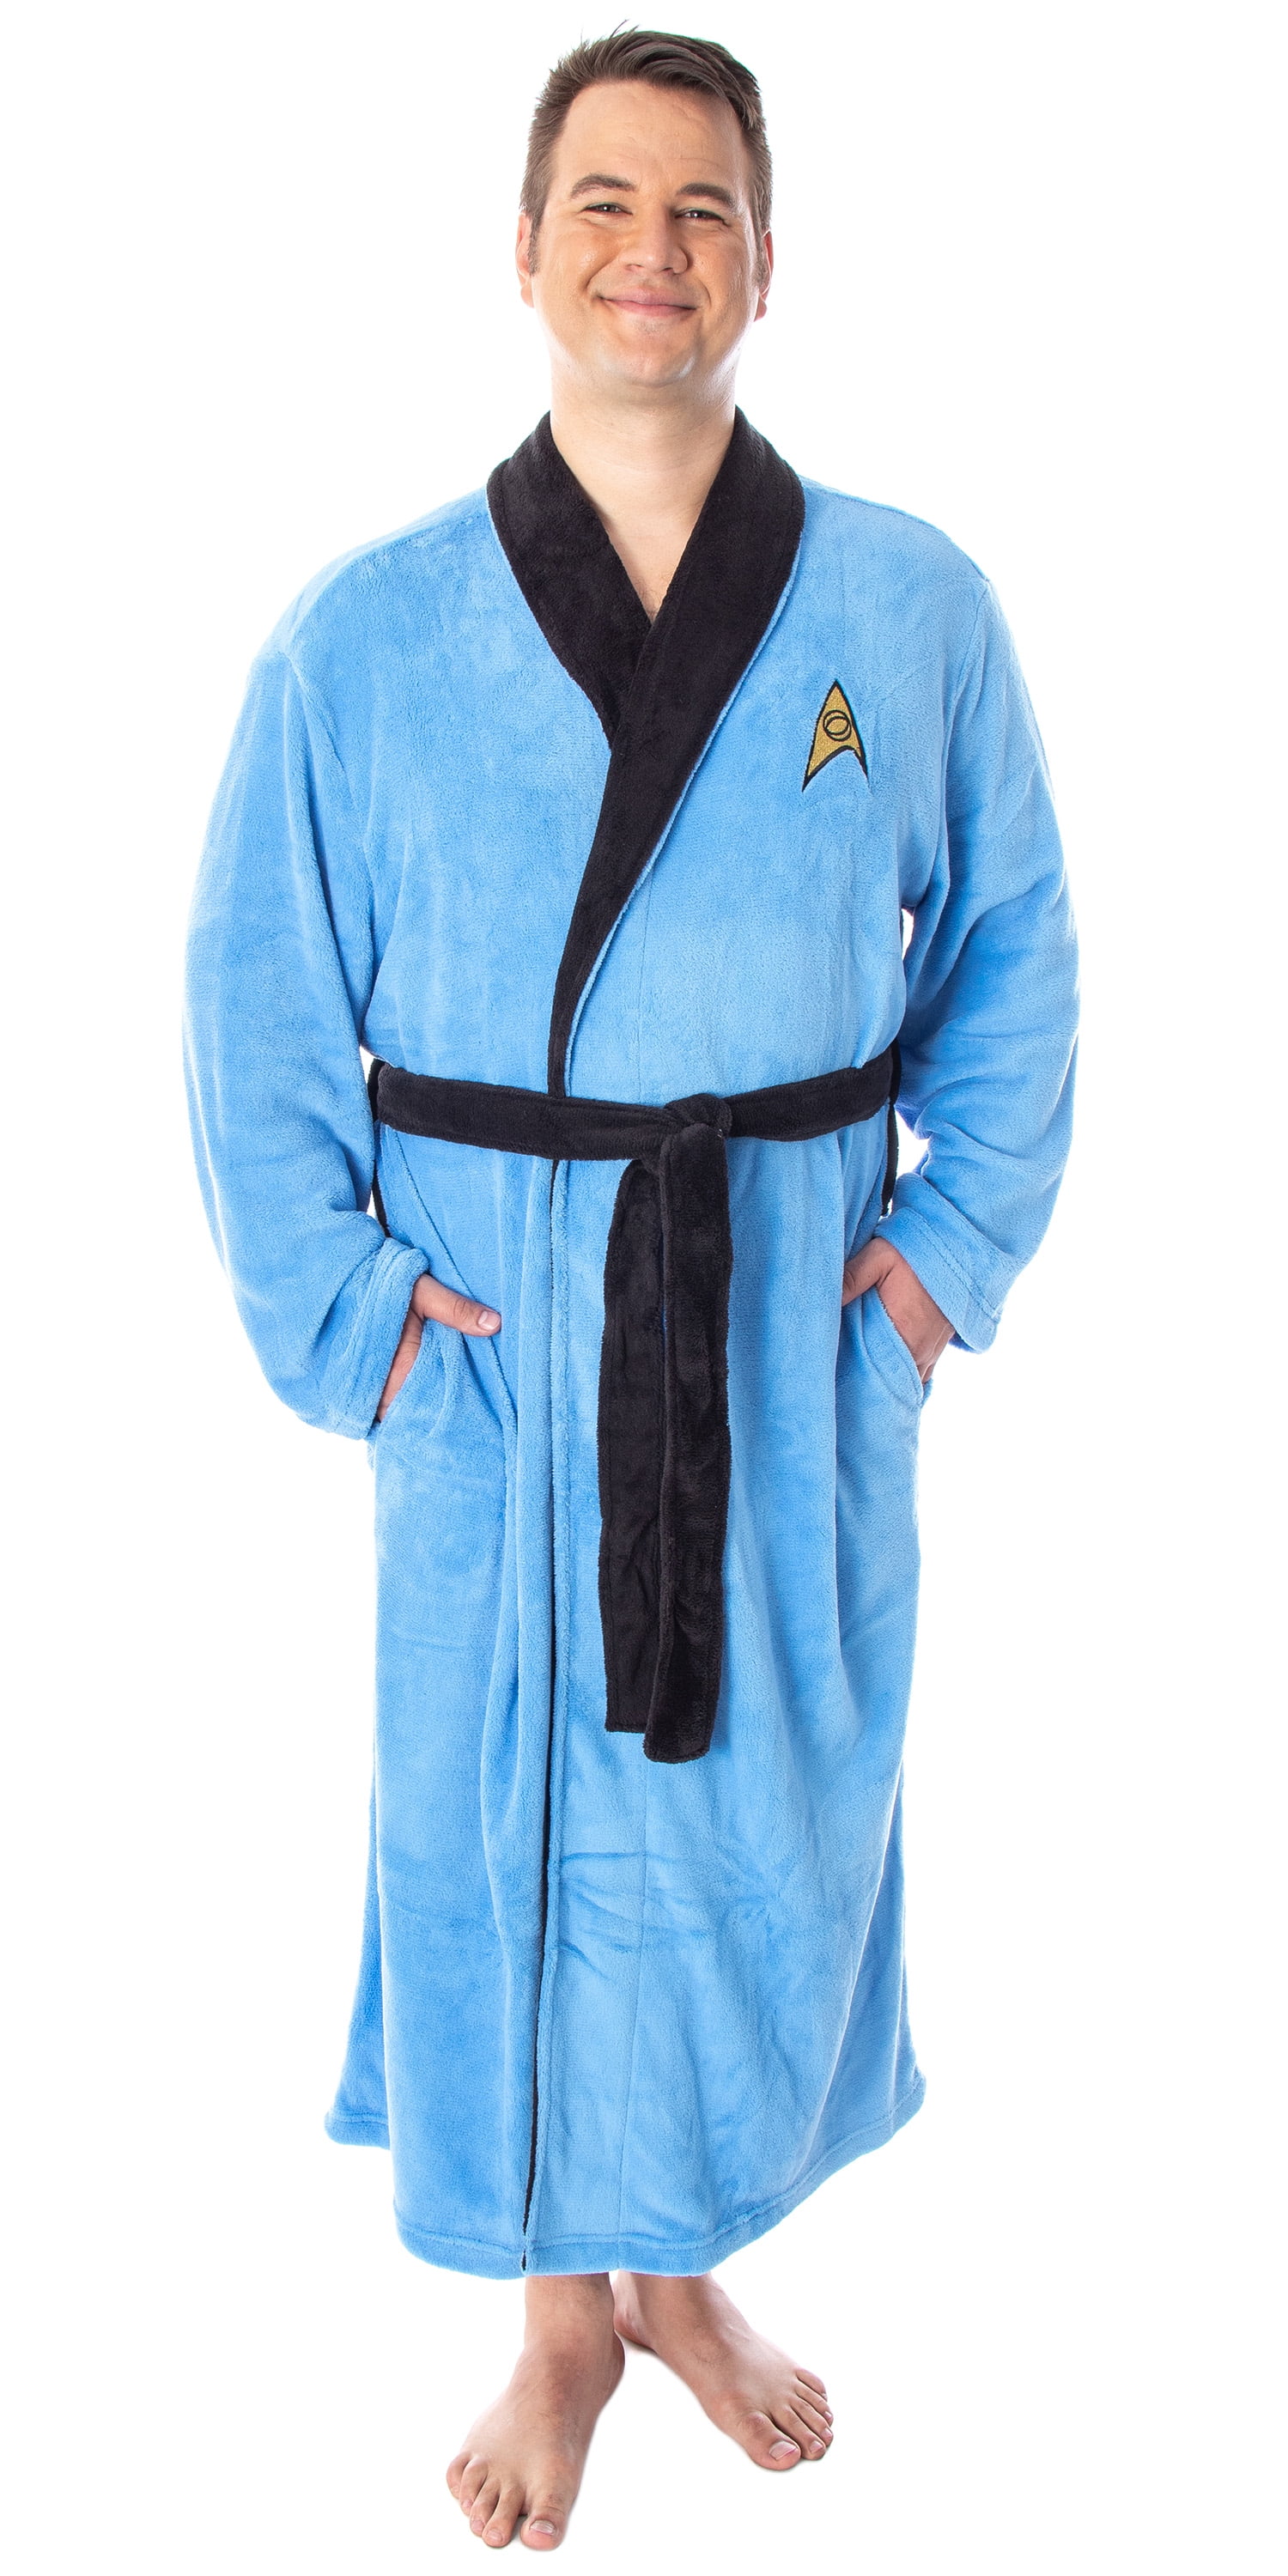 star trek robe costume